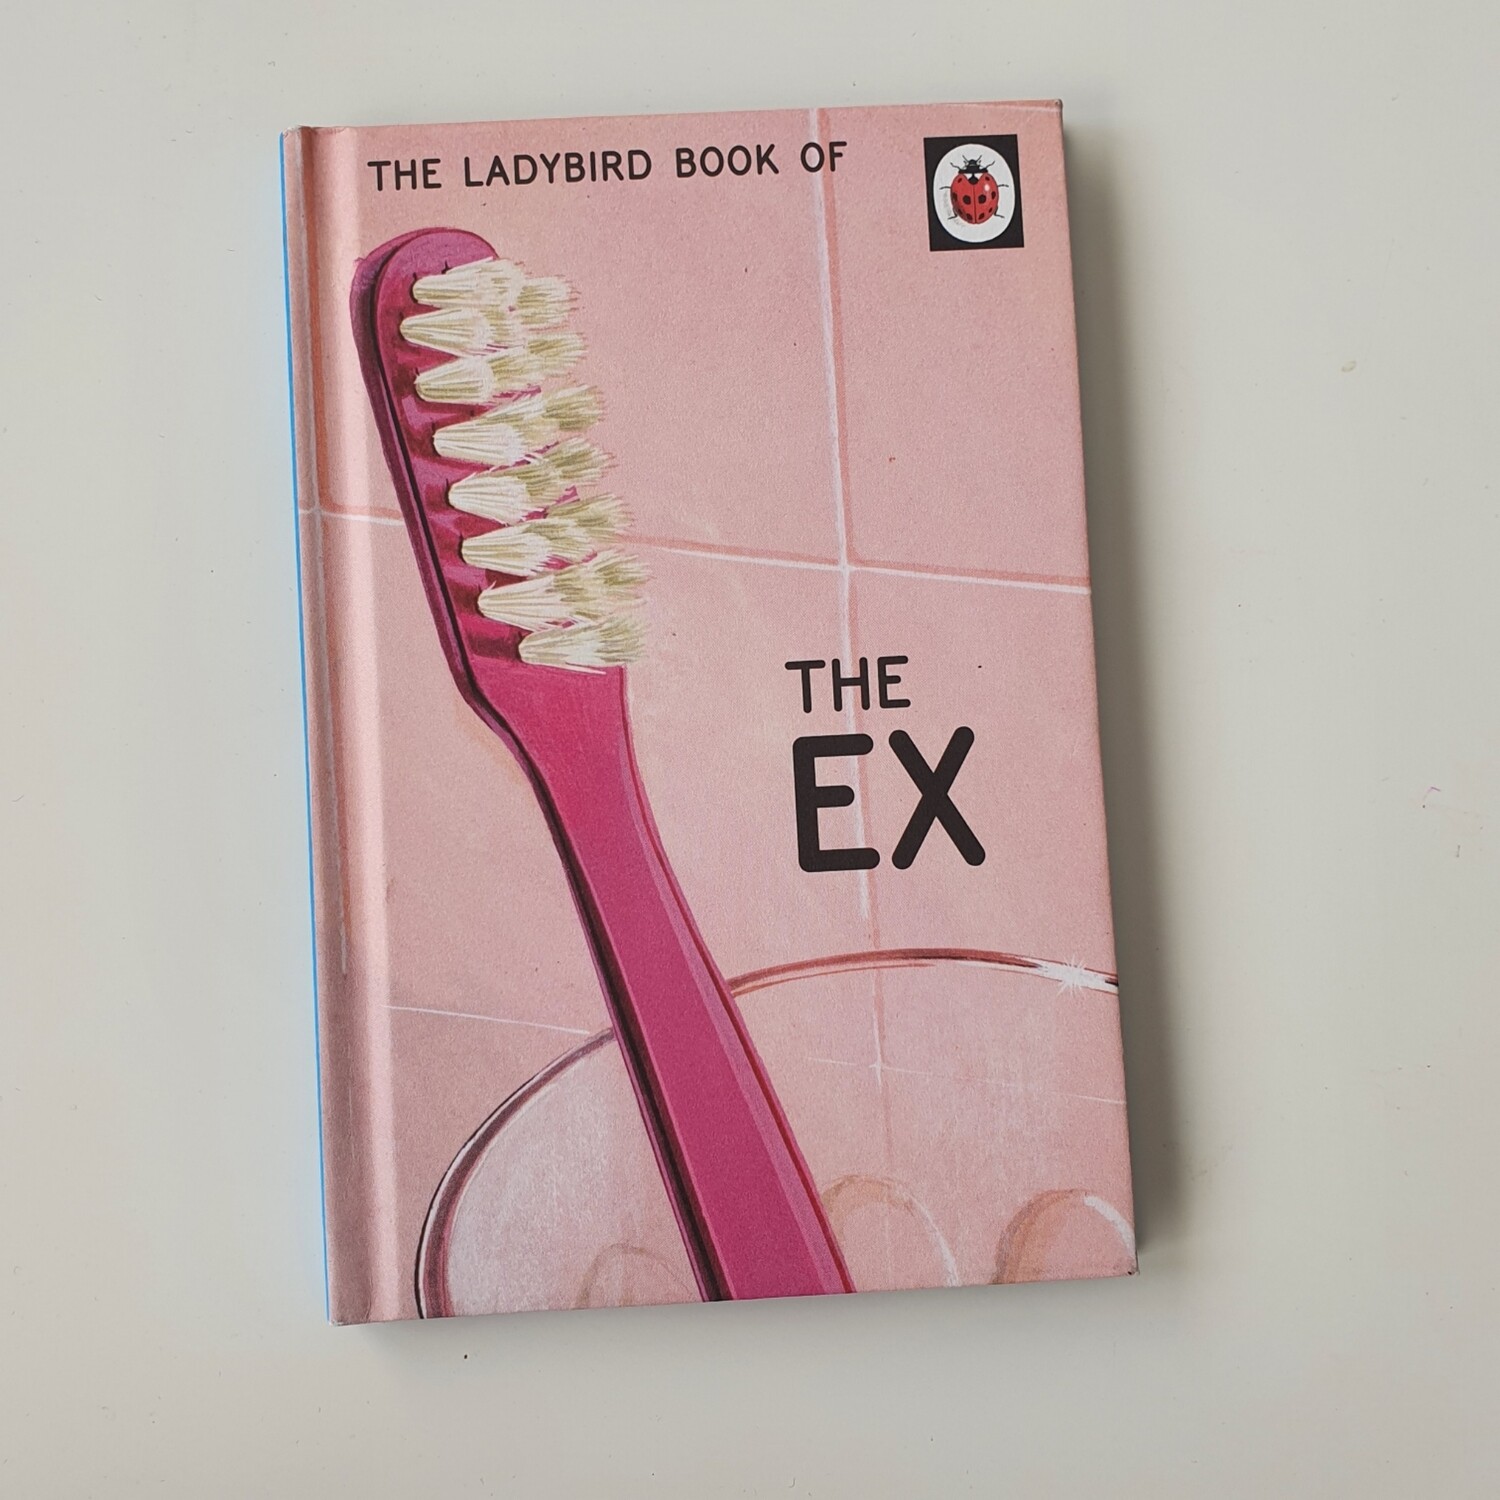 The Ex - ladybird book - pink toothbrush